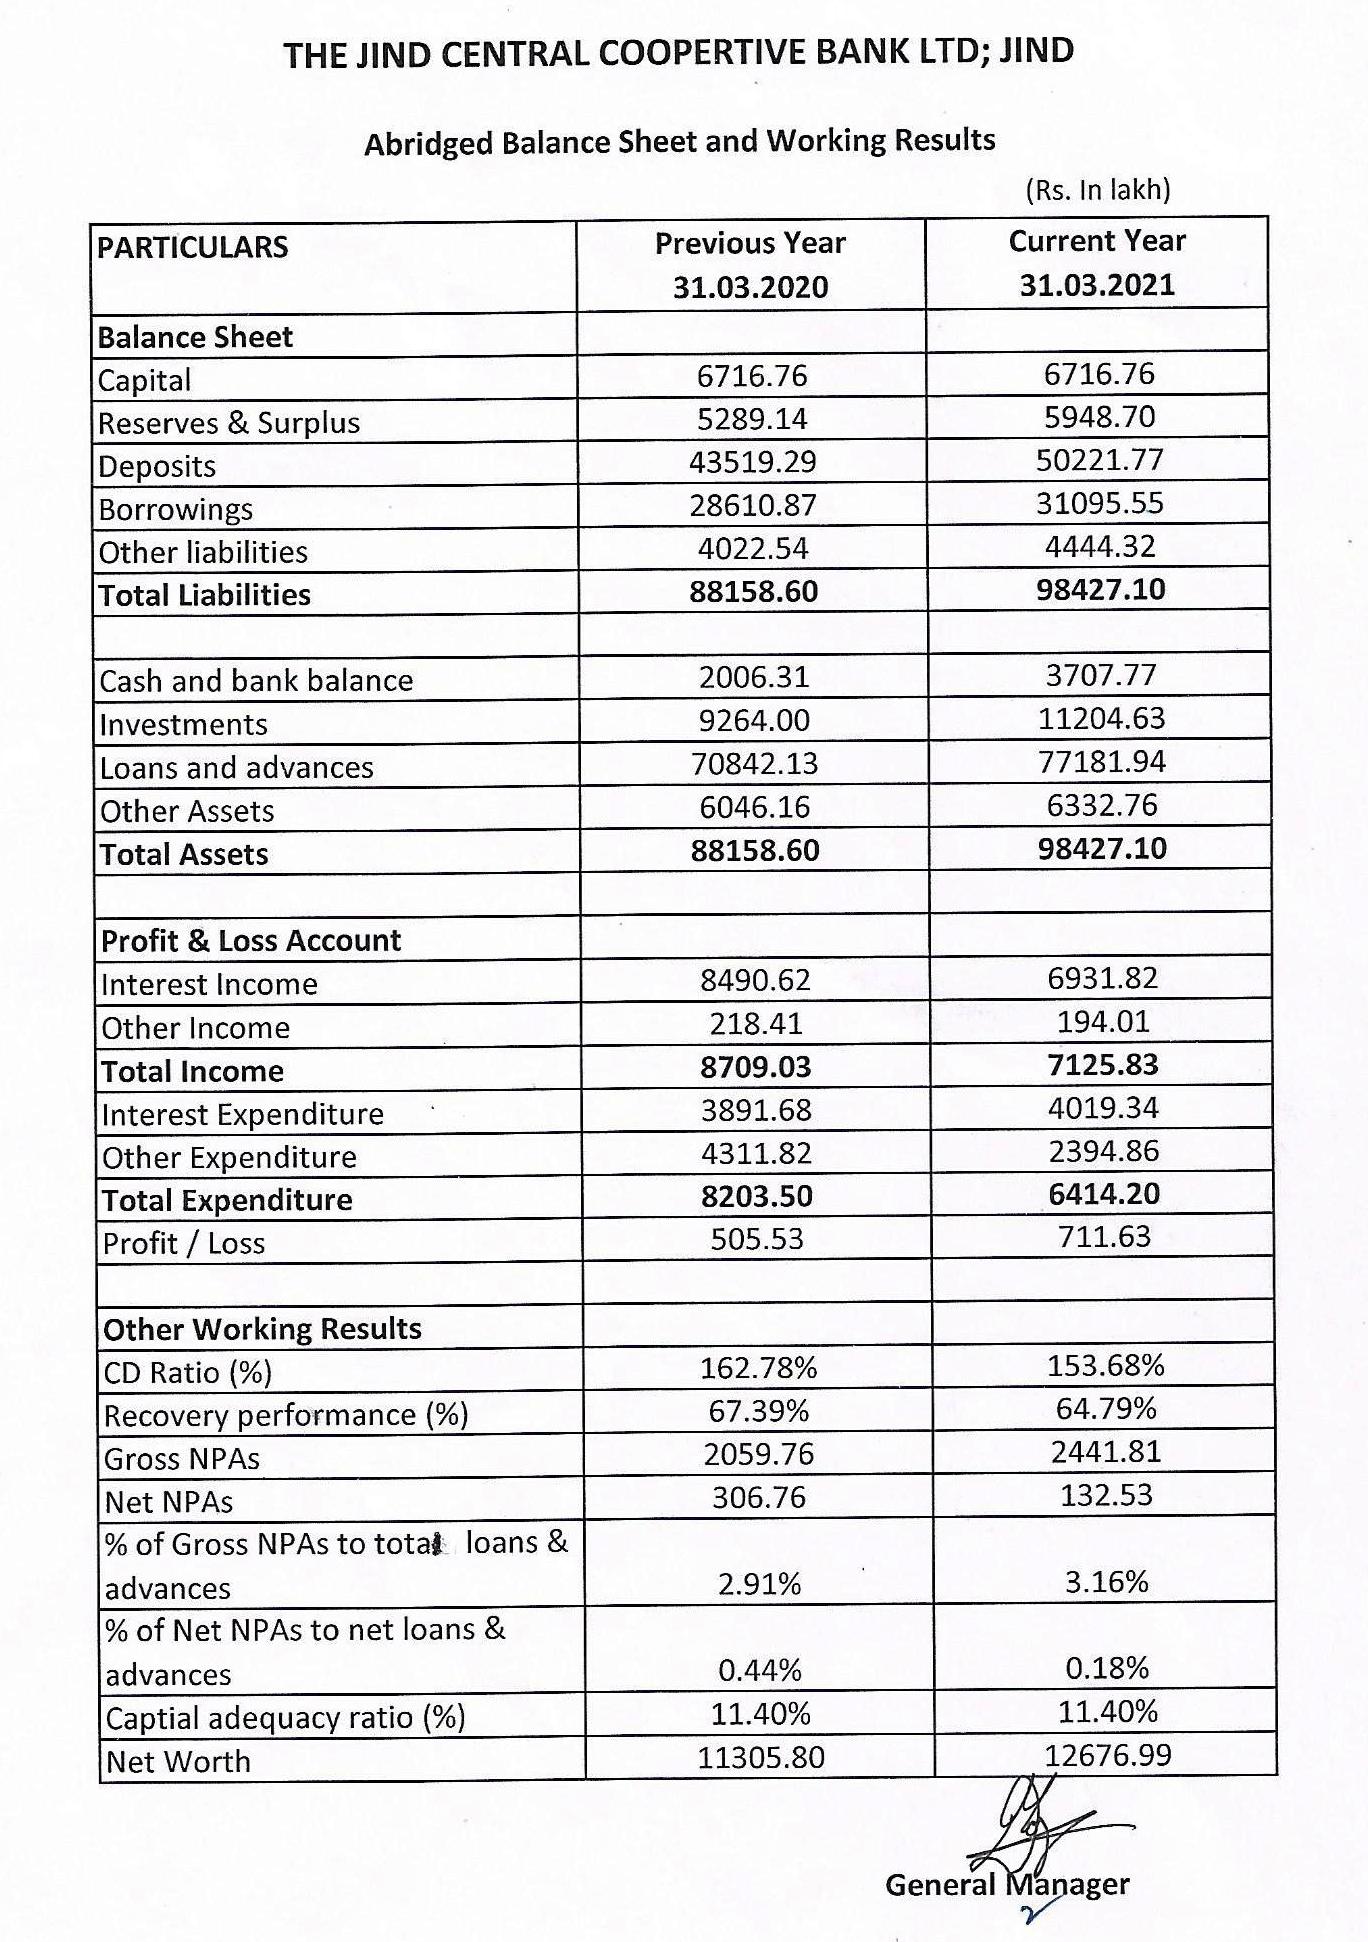 Latest abridged balance sheet of the bank